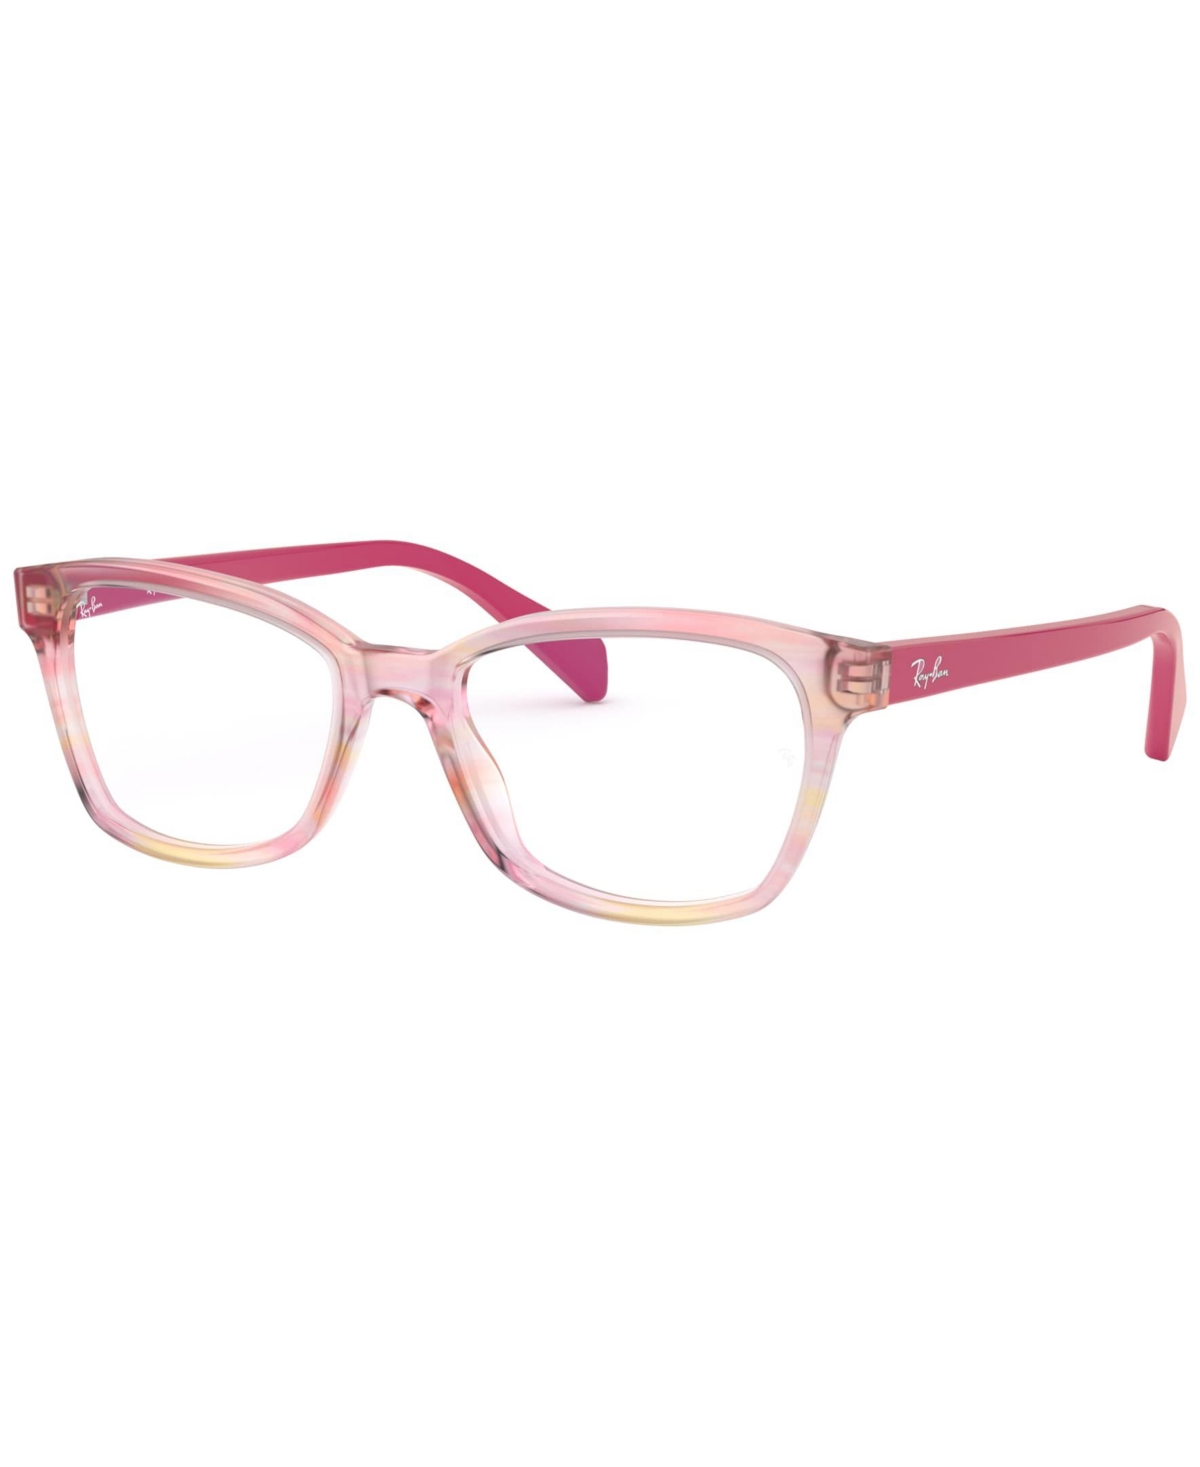 RY1591 Child Square Eyeglasses - Pink